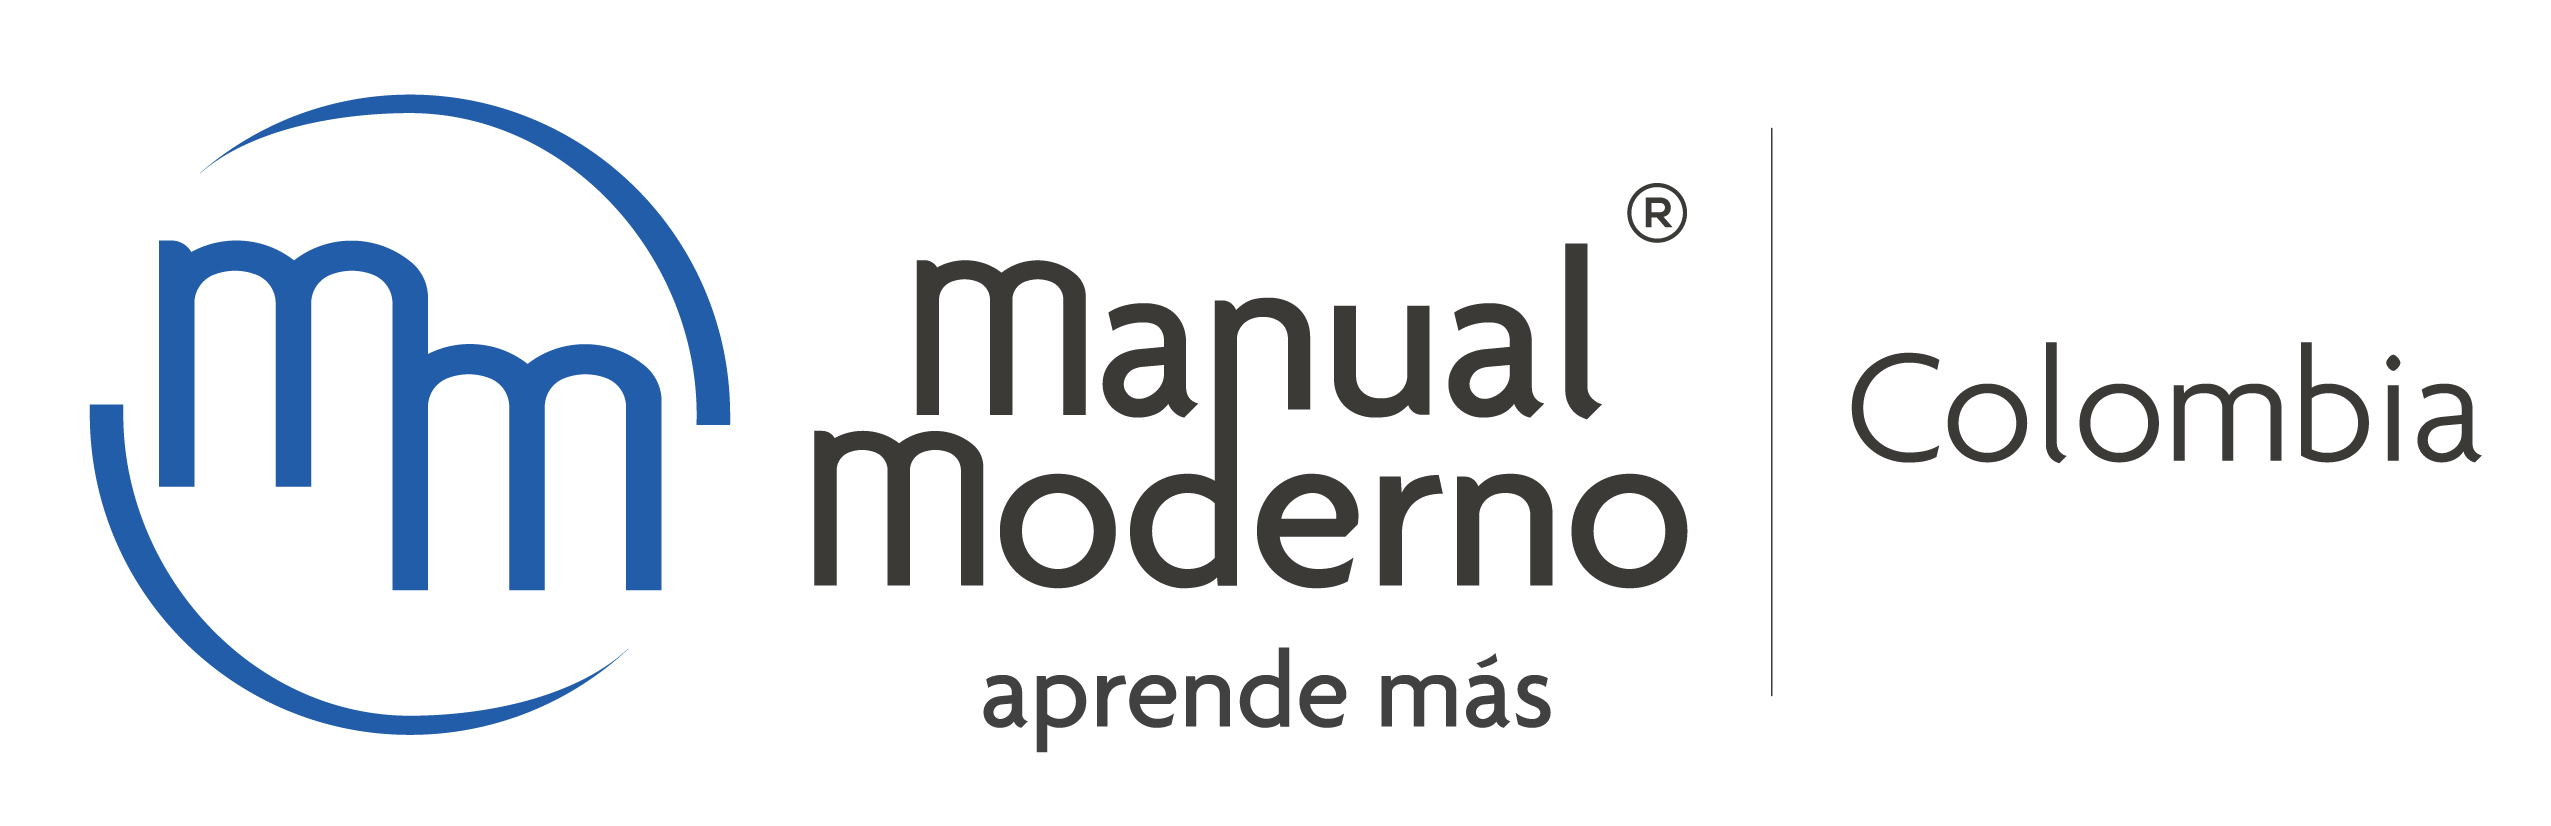 Manual Moderno